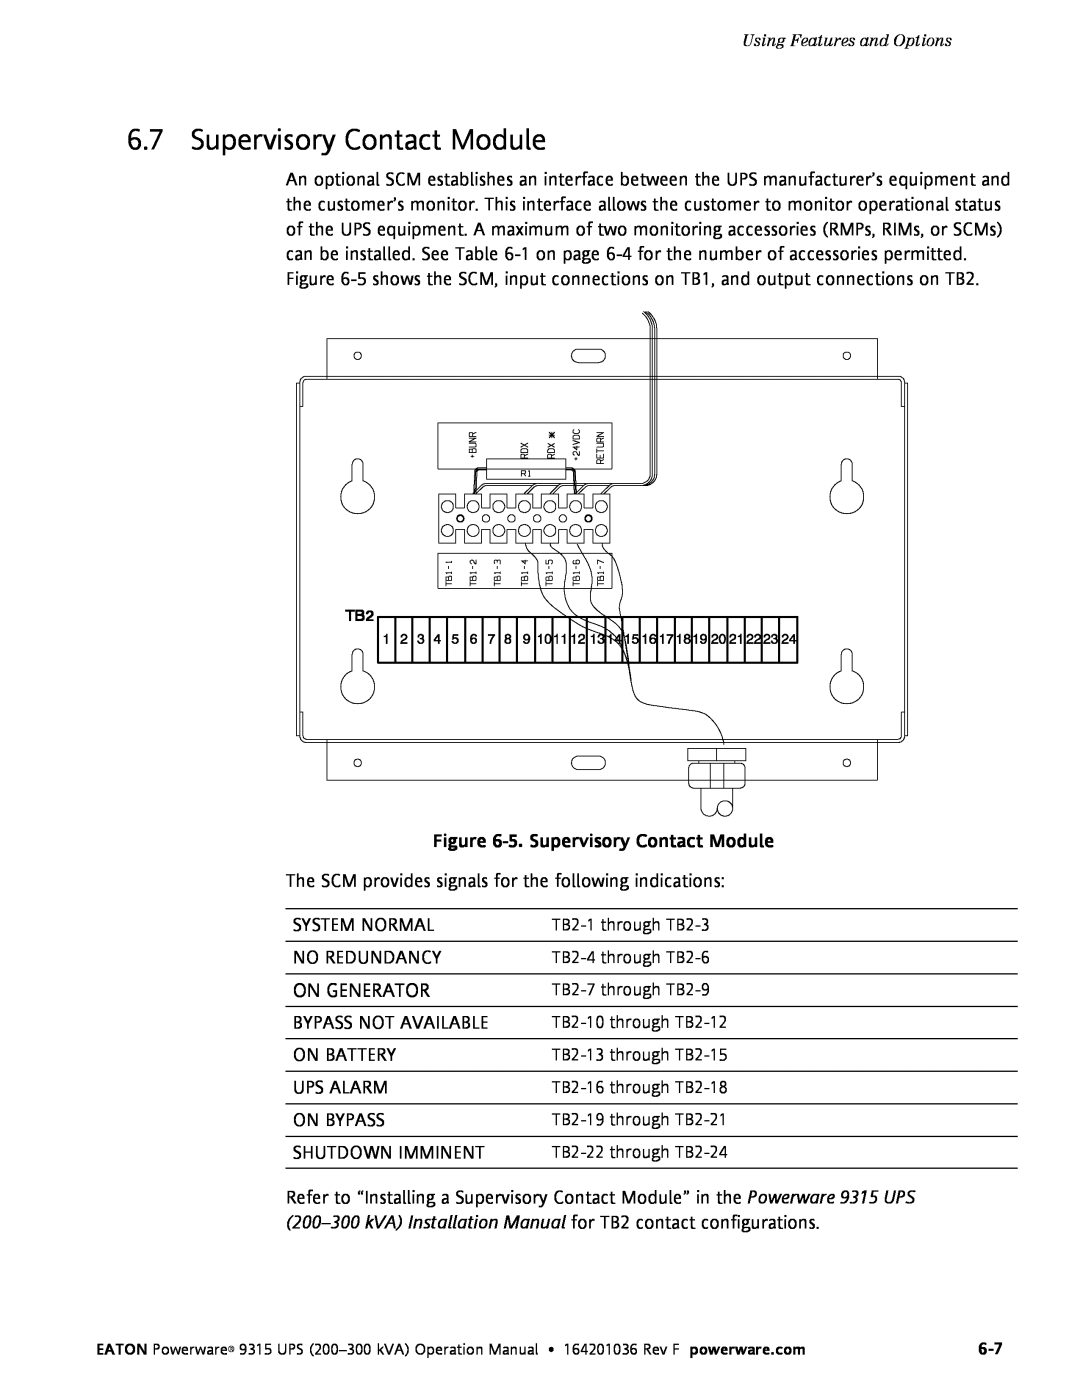 Eaton Electrical Powerware 9315 operation manual On Generator, 5. Supervisory Contact Module 